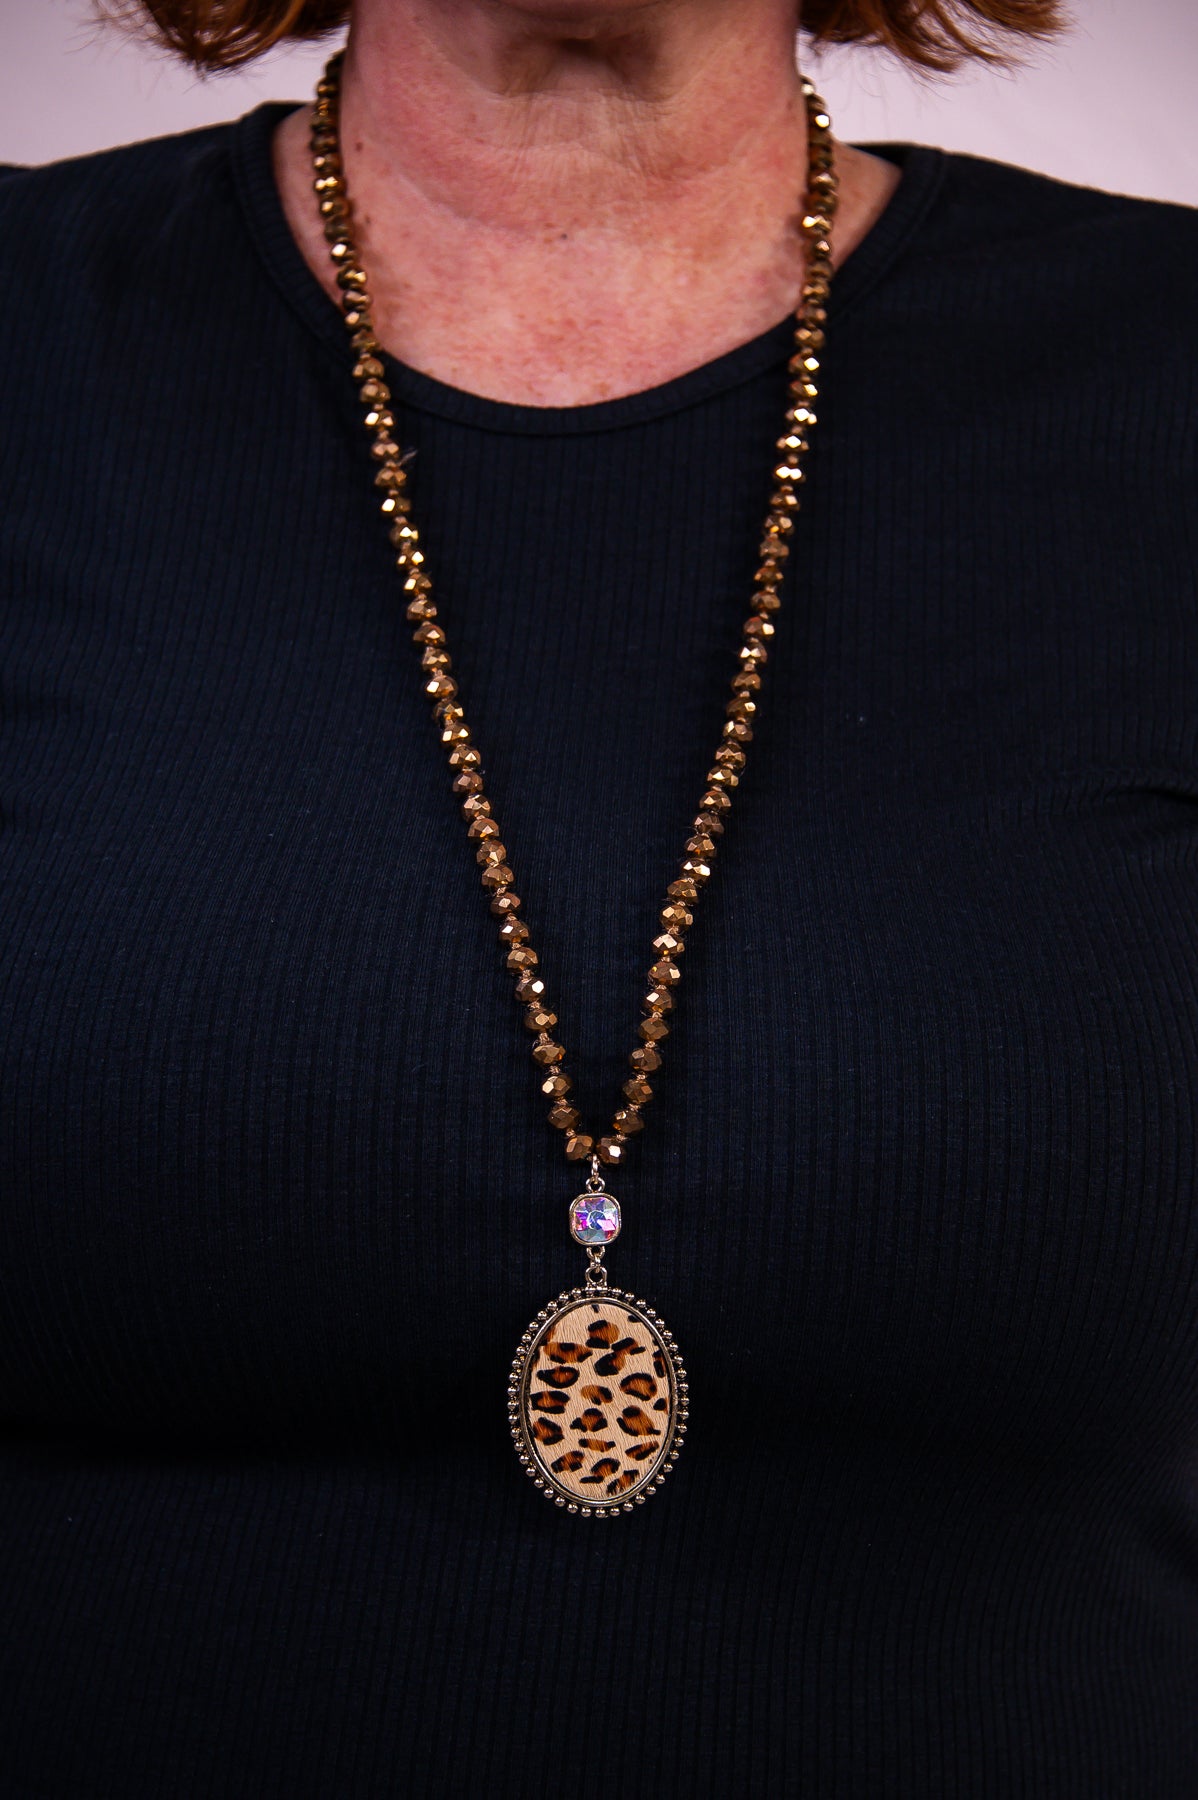 Bronze/Multi Color Beaded Pendant Necklace - NEK4306BZ